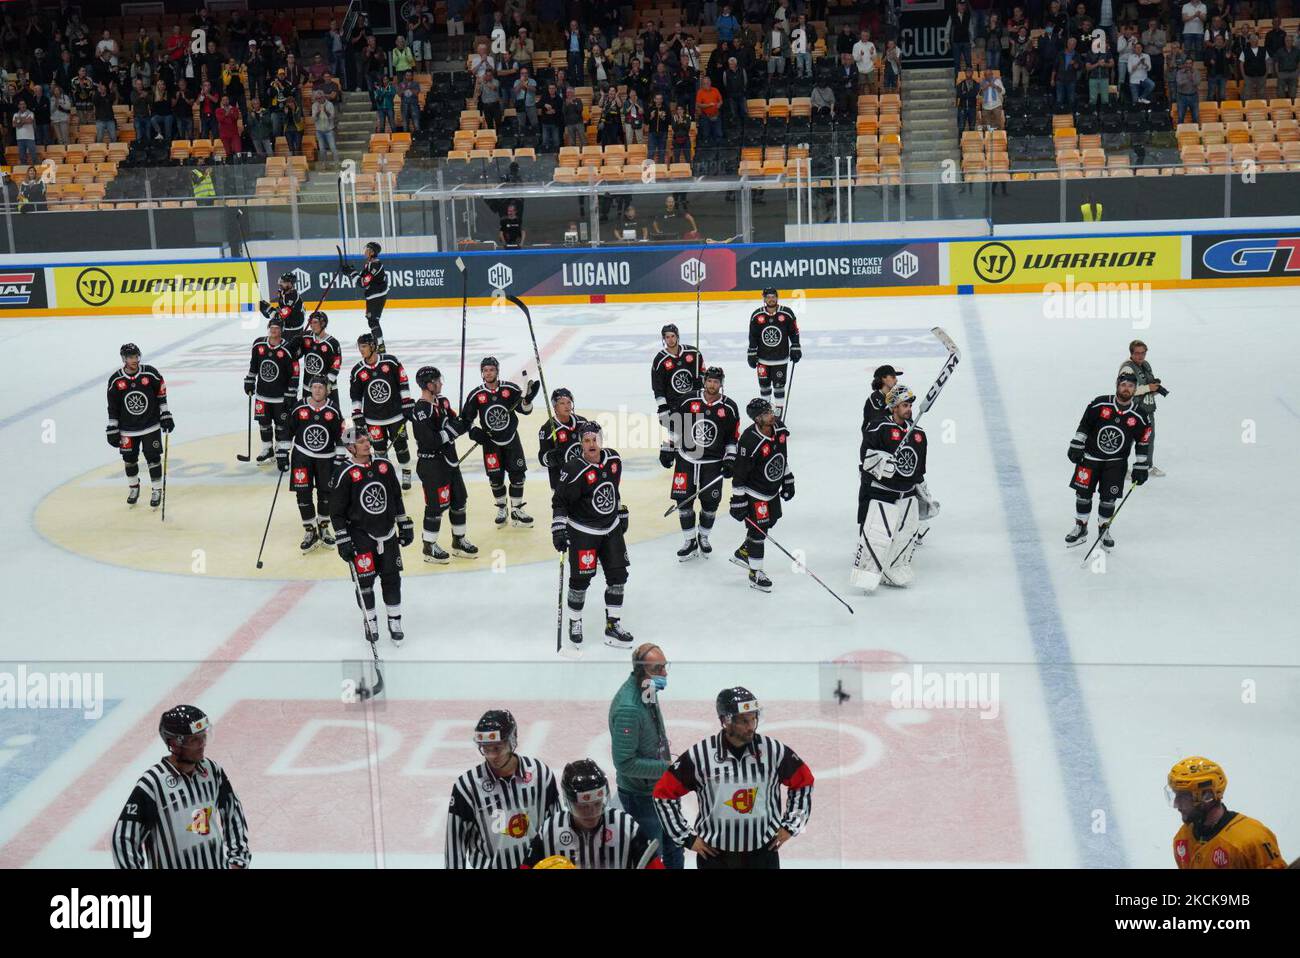 HC Pilsen - Champions Hockey League Shop powered by Warrior